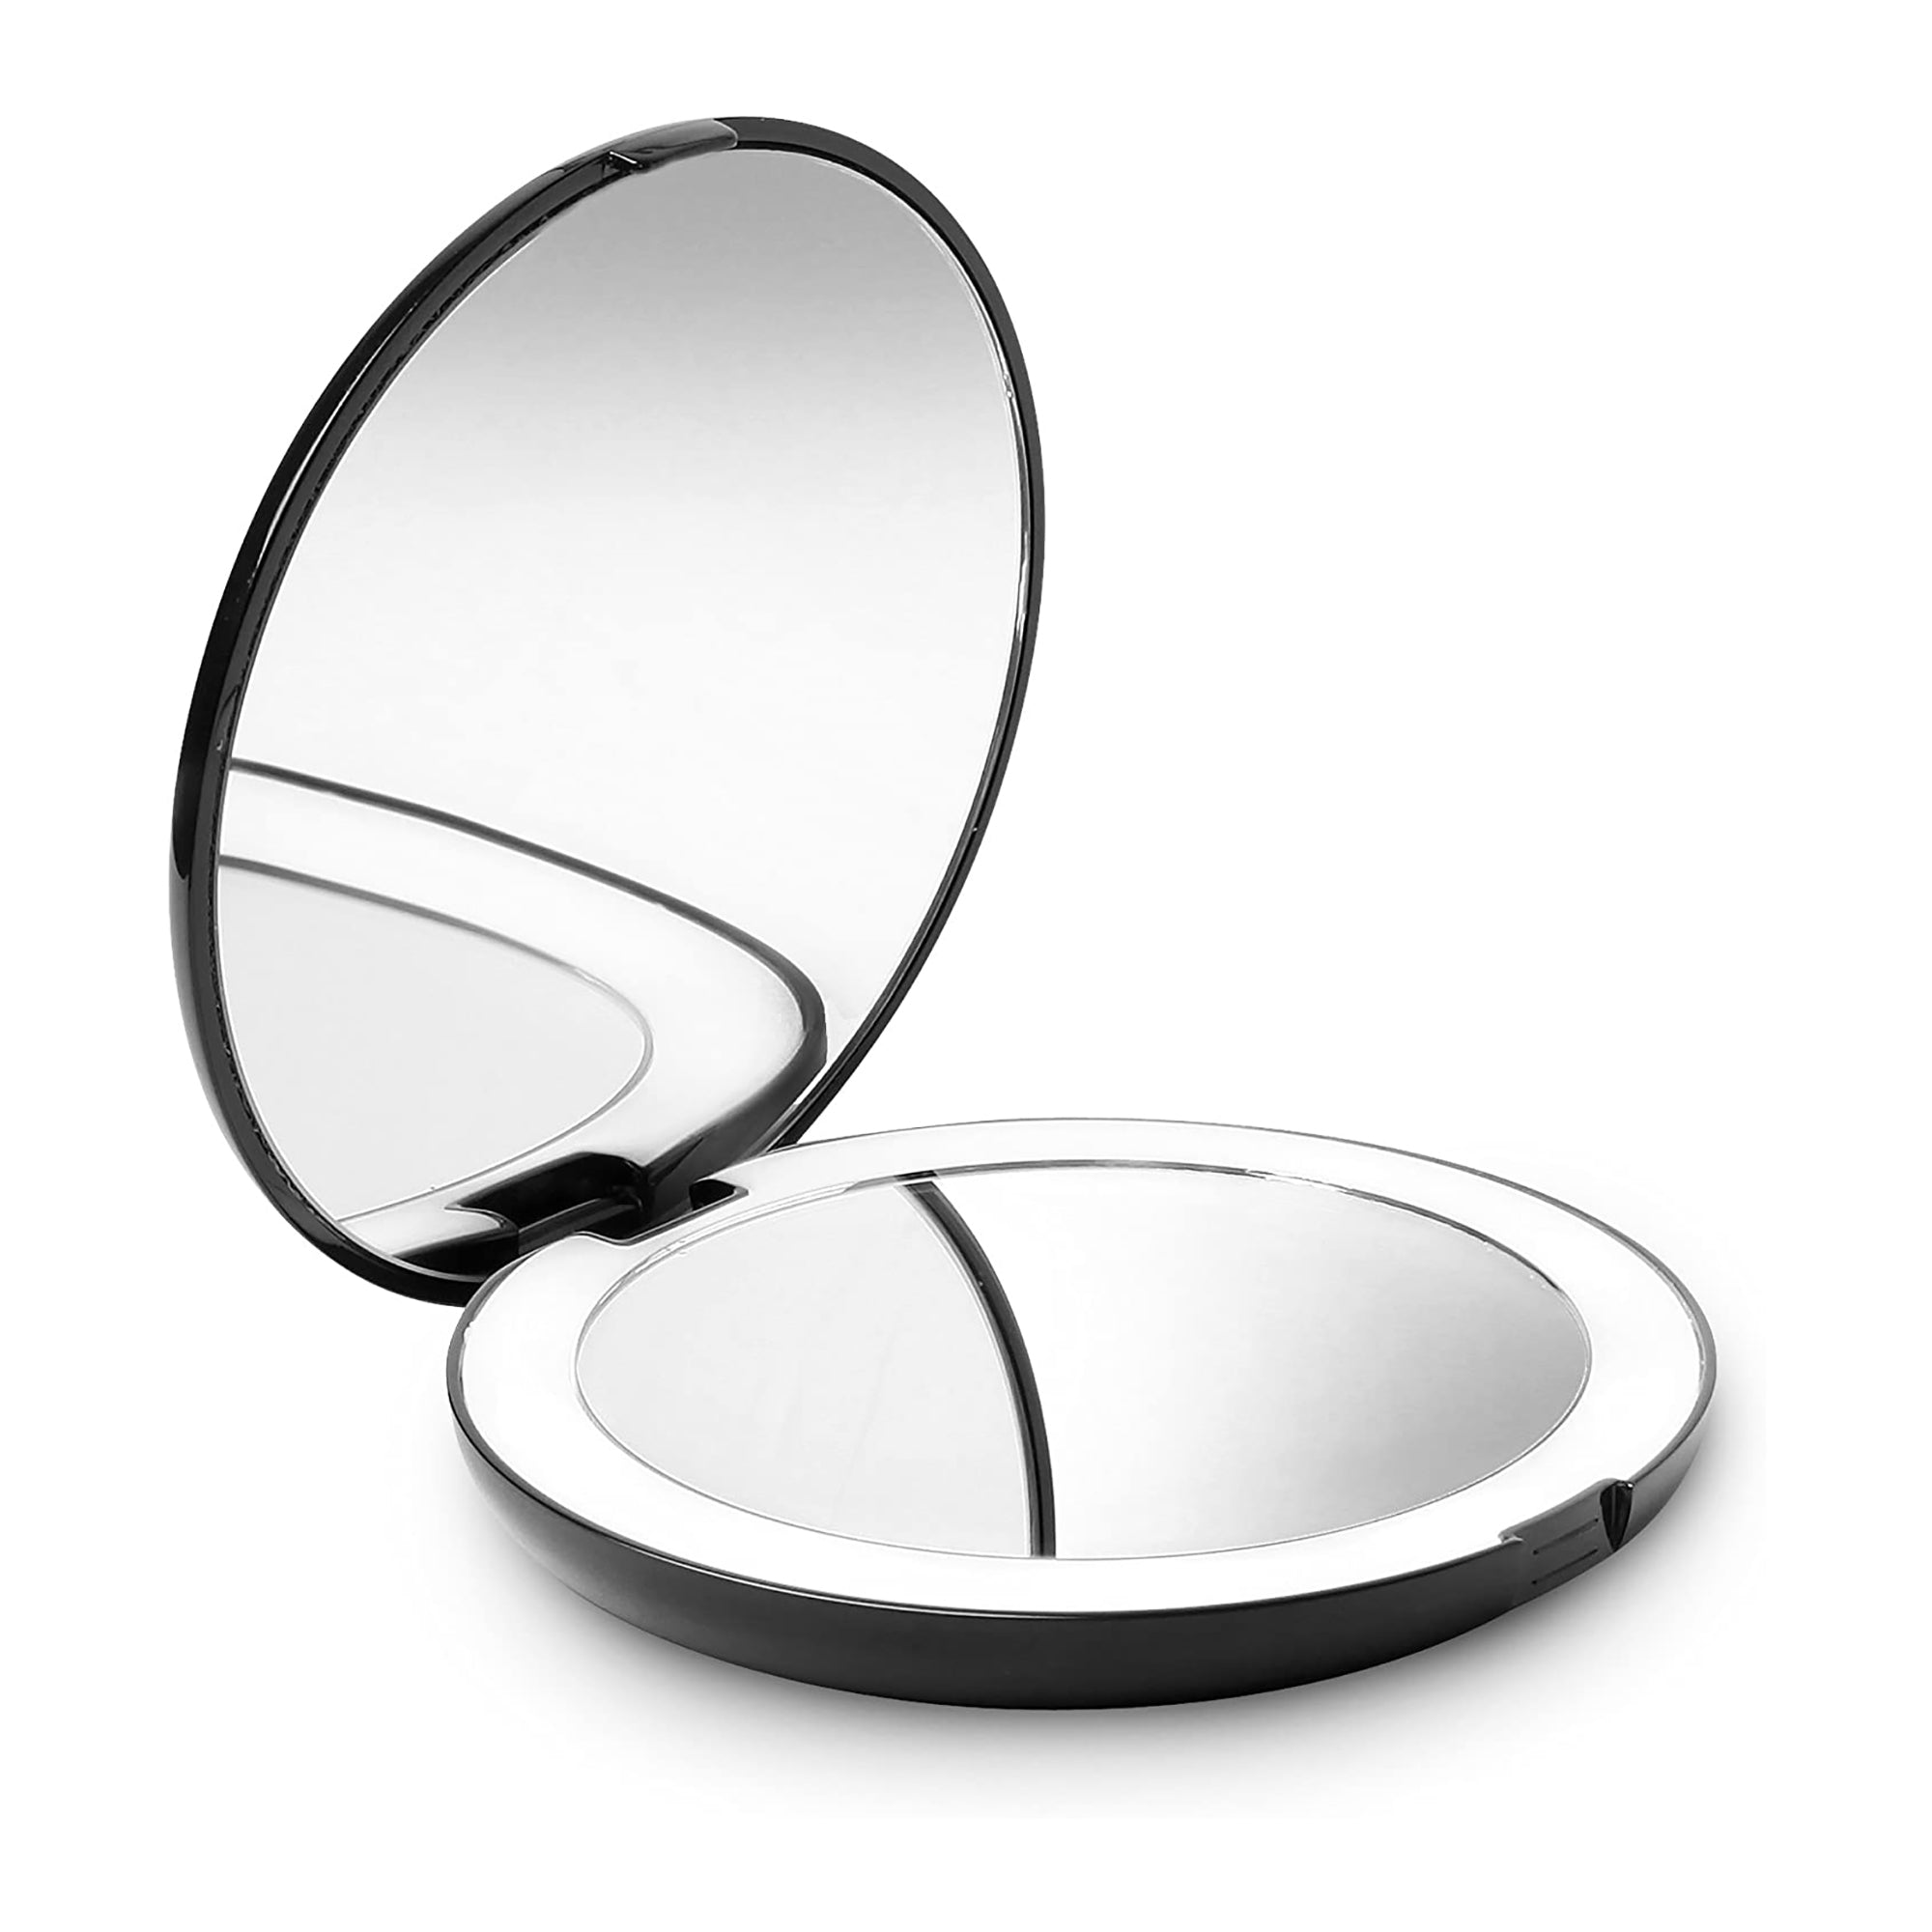 Fancii Mila Compact Mirror - Black 